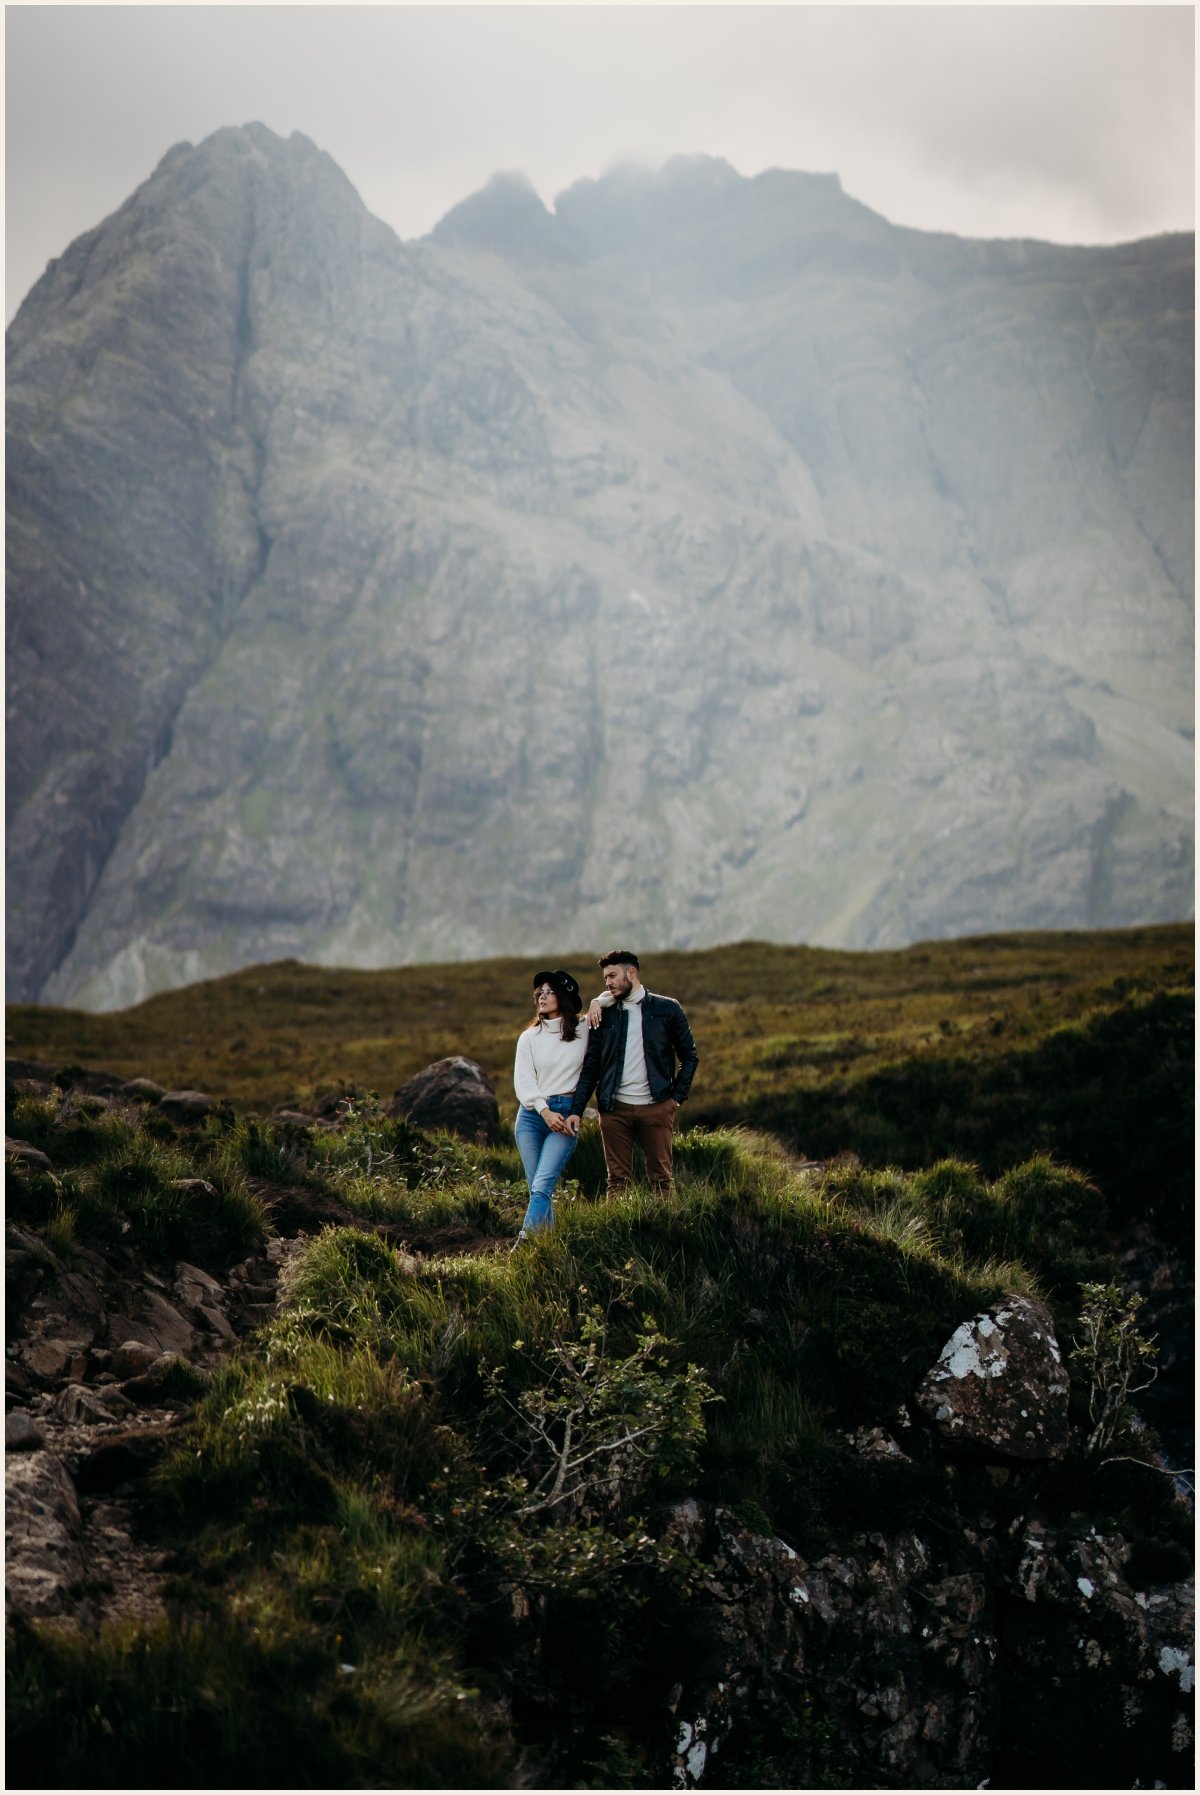 Couples Portraits at the Fairy Pools in Scotland | Lauren Crumpler Photography | Elopement Wedding Photographer